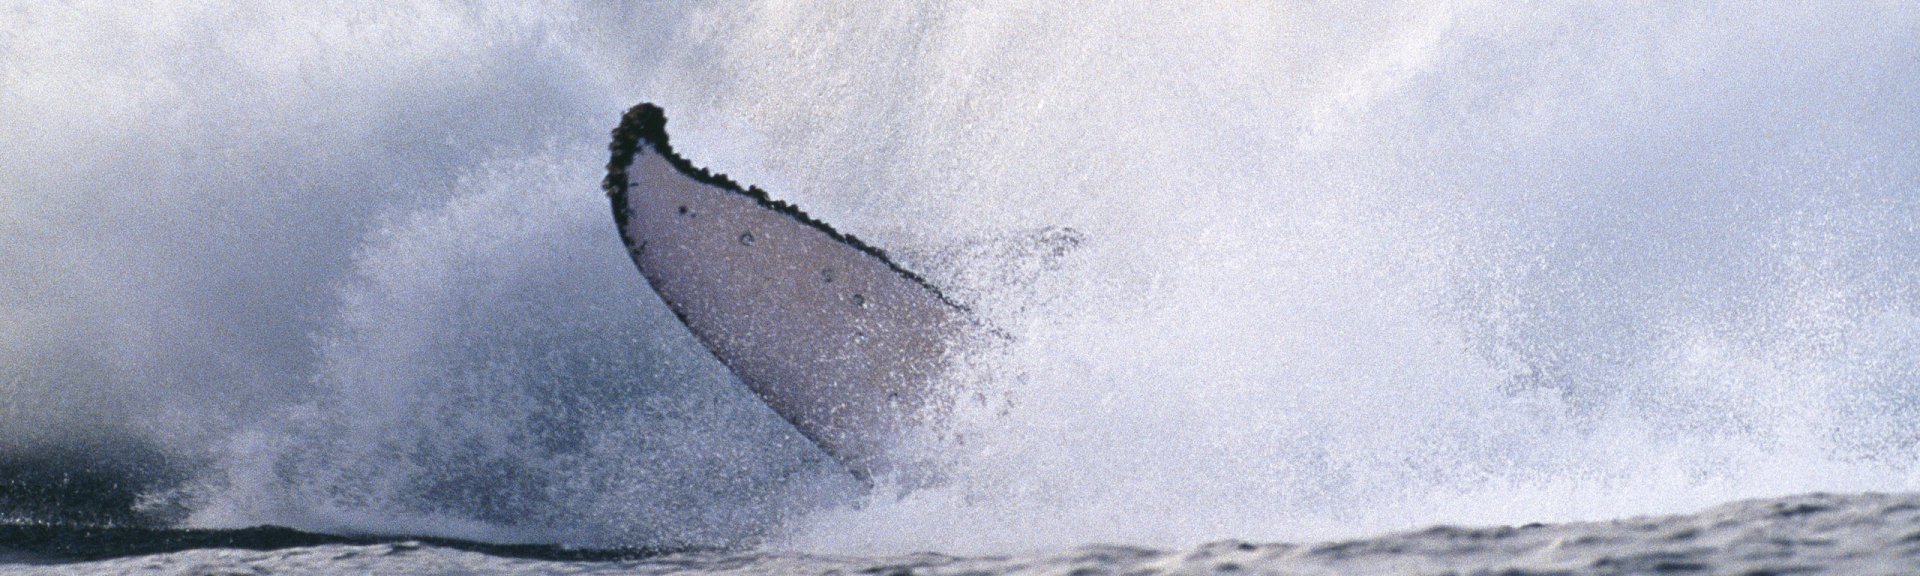 Humpback whale, splashing